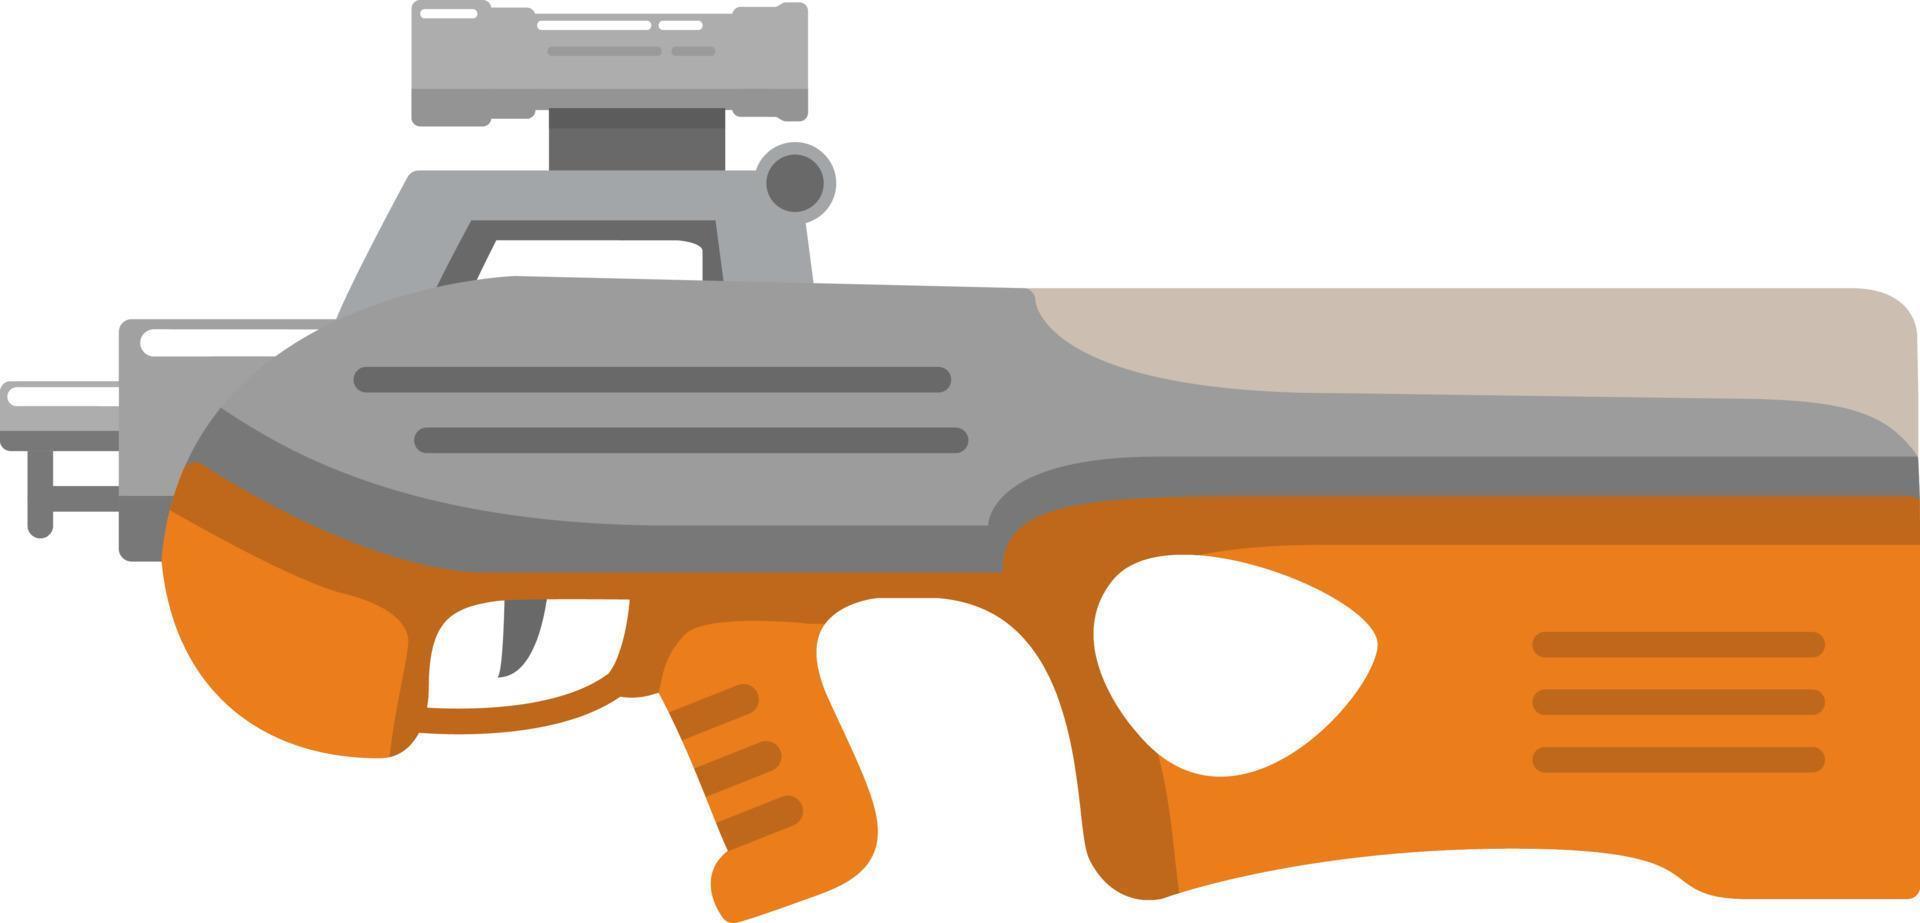 vapen guns.set maskin pistol modern överfall.platt stil vektor.isolerad på en vit bakgrund. vektor